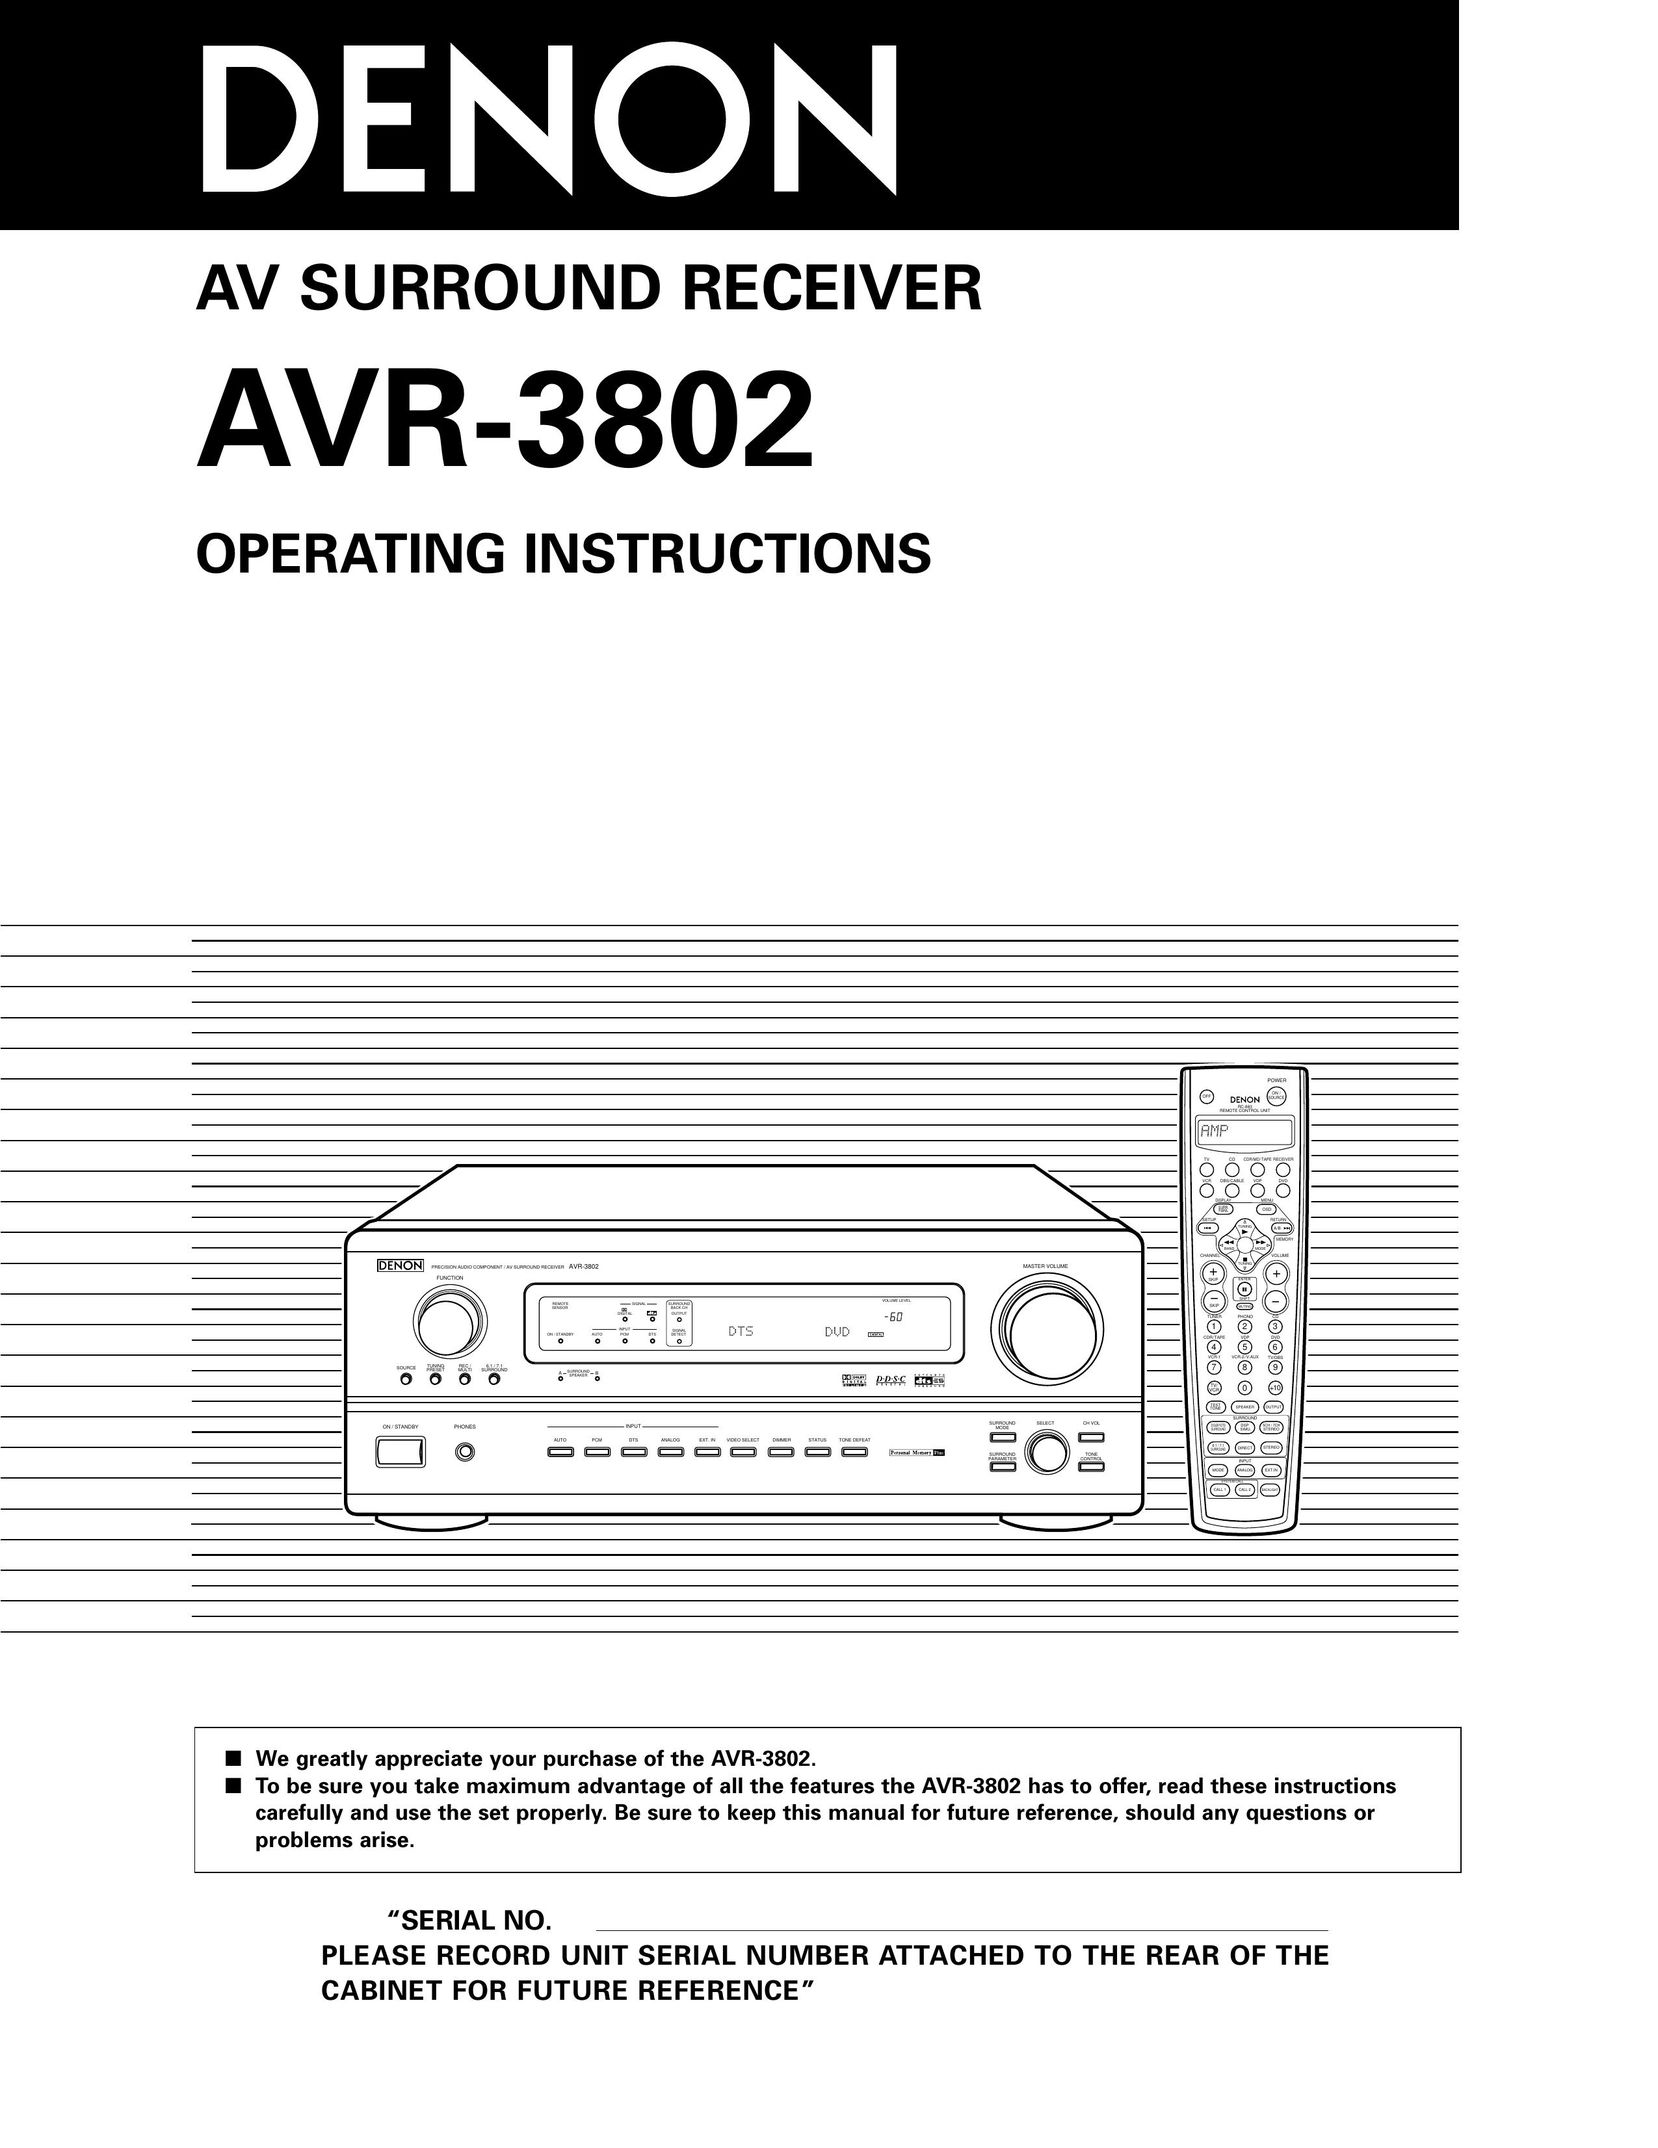 Denon AVR-3802 Stereo System User Manual